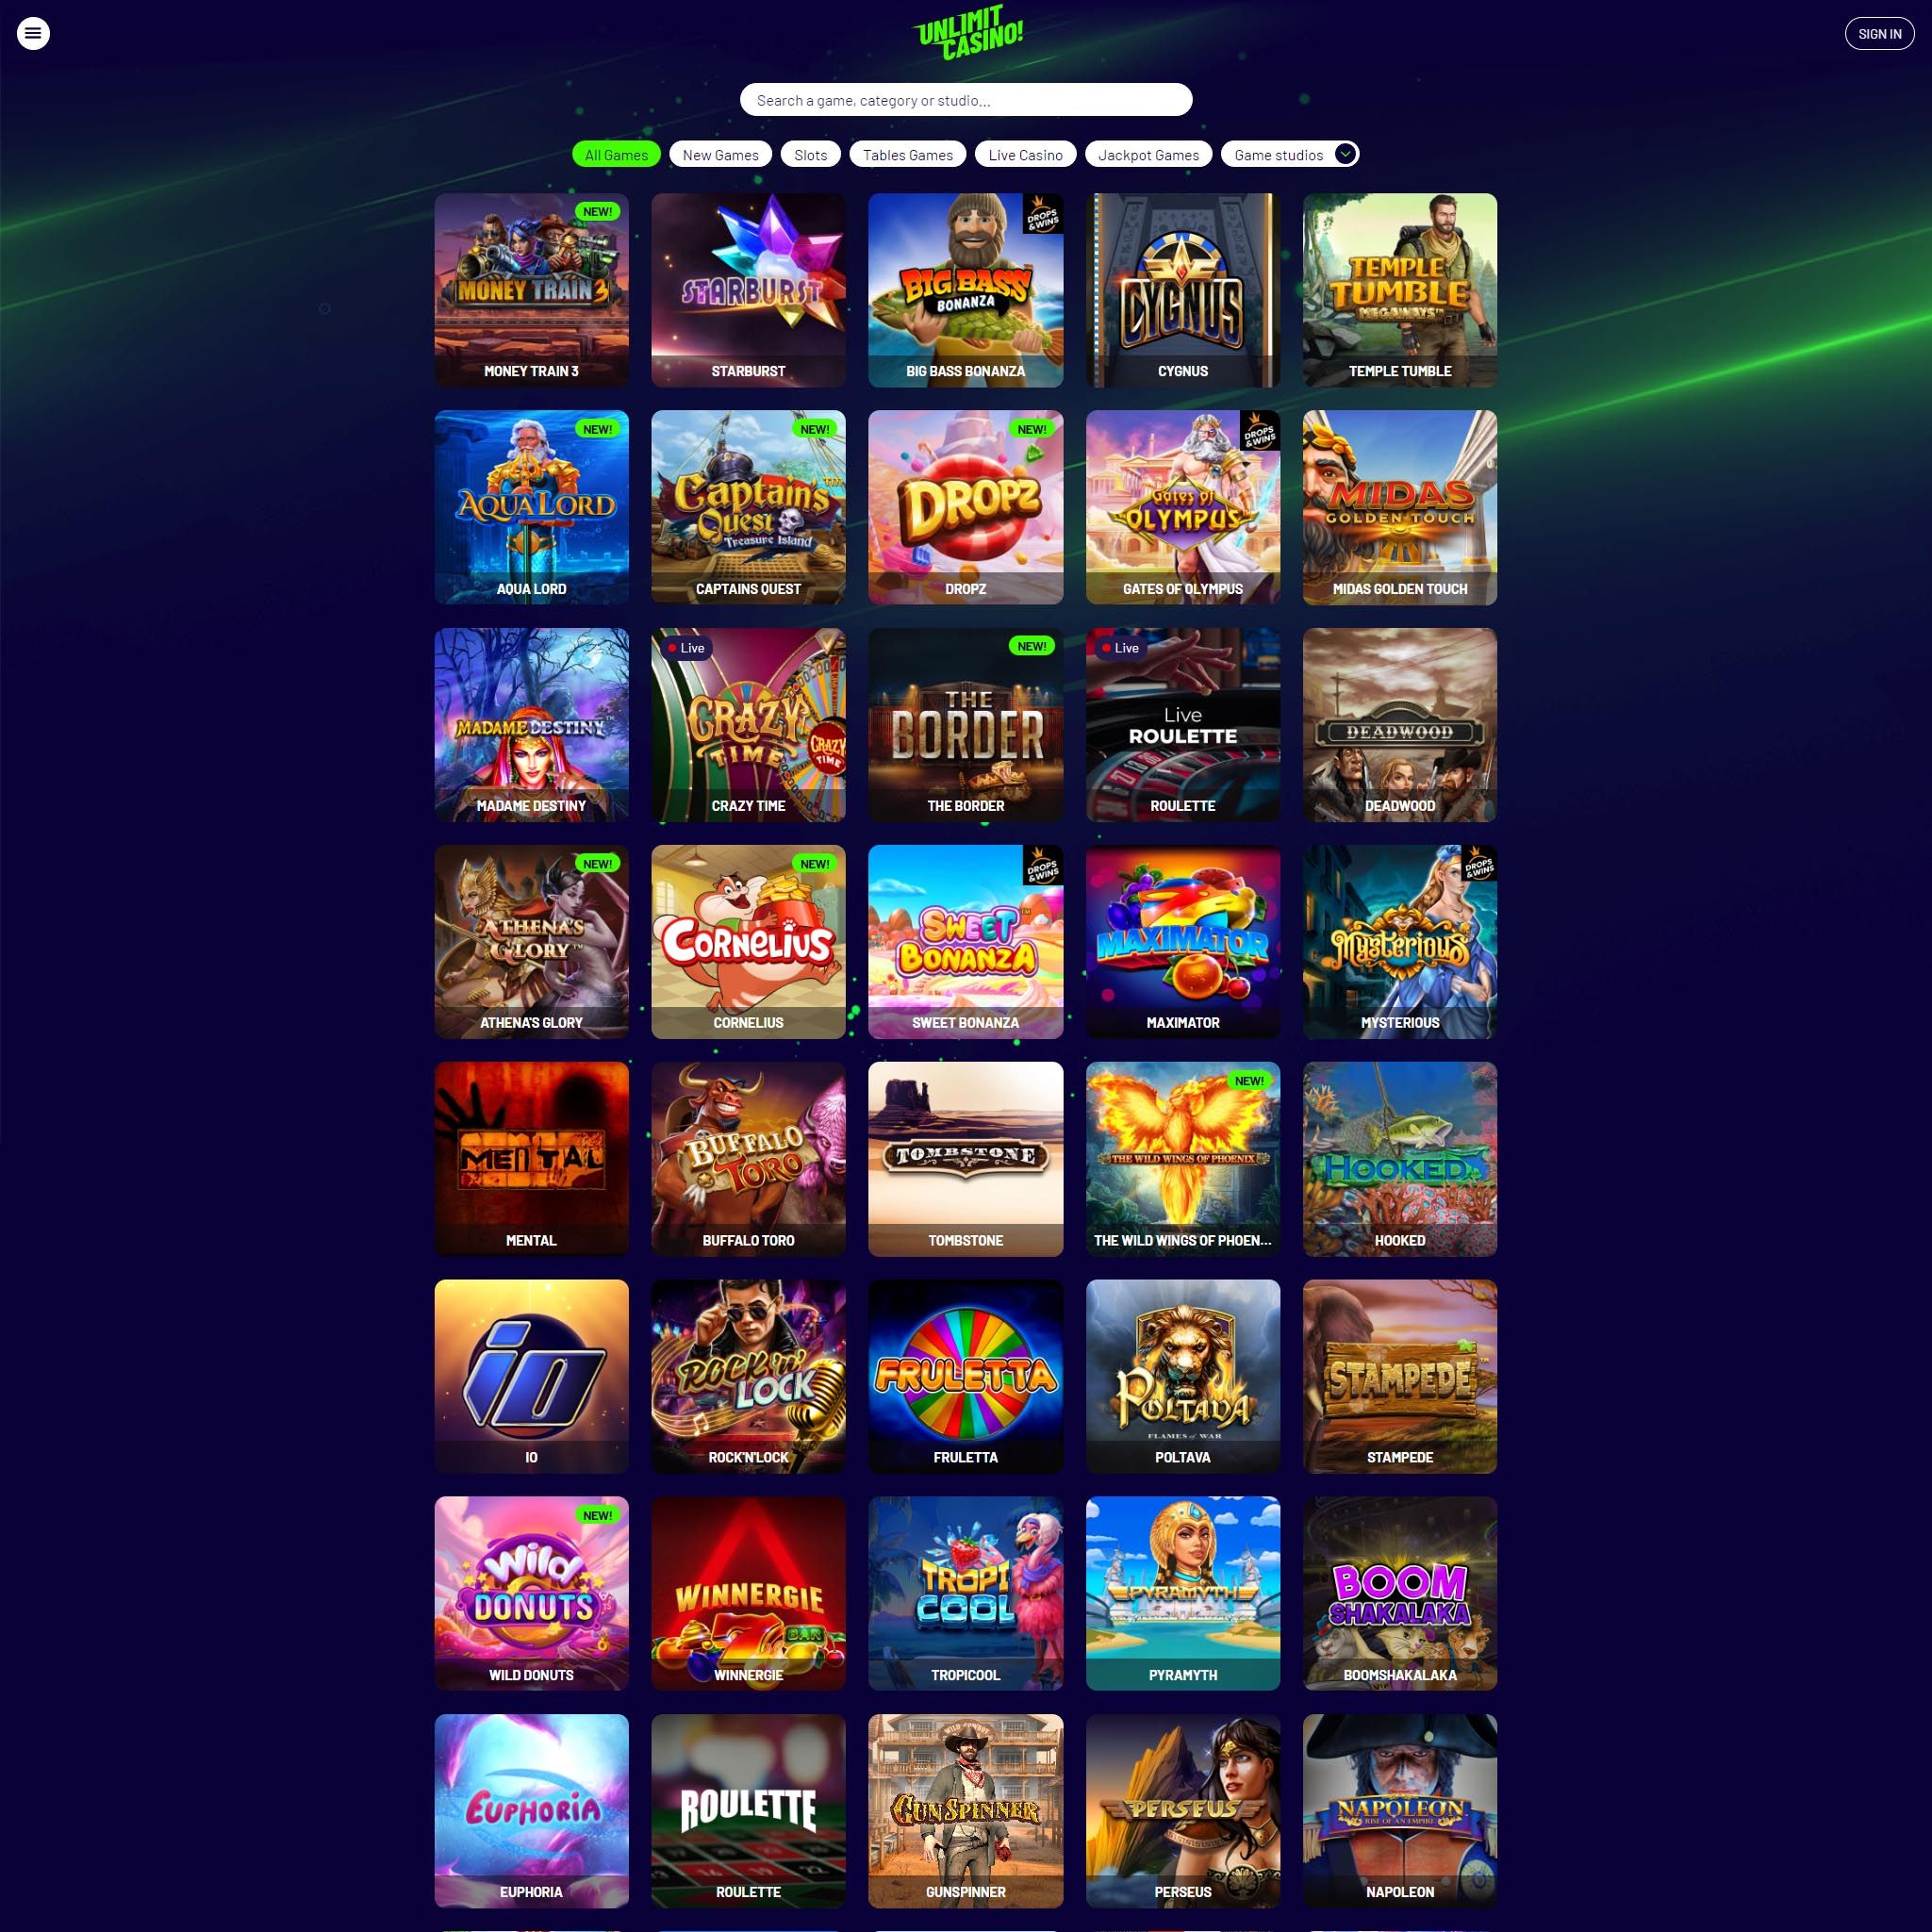 Unlimit Casino full games catalogue